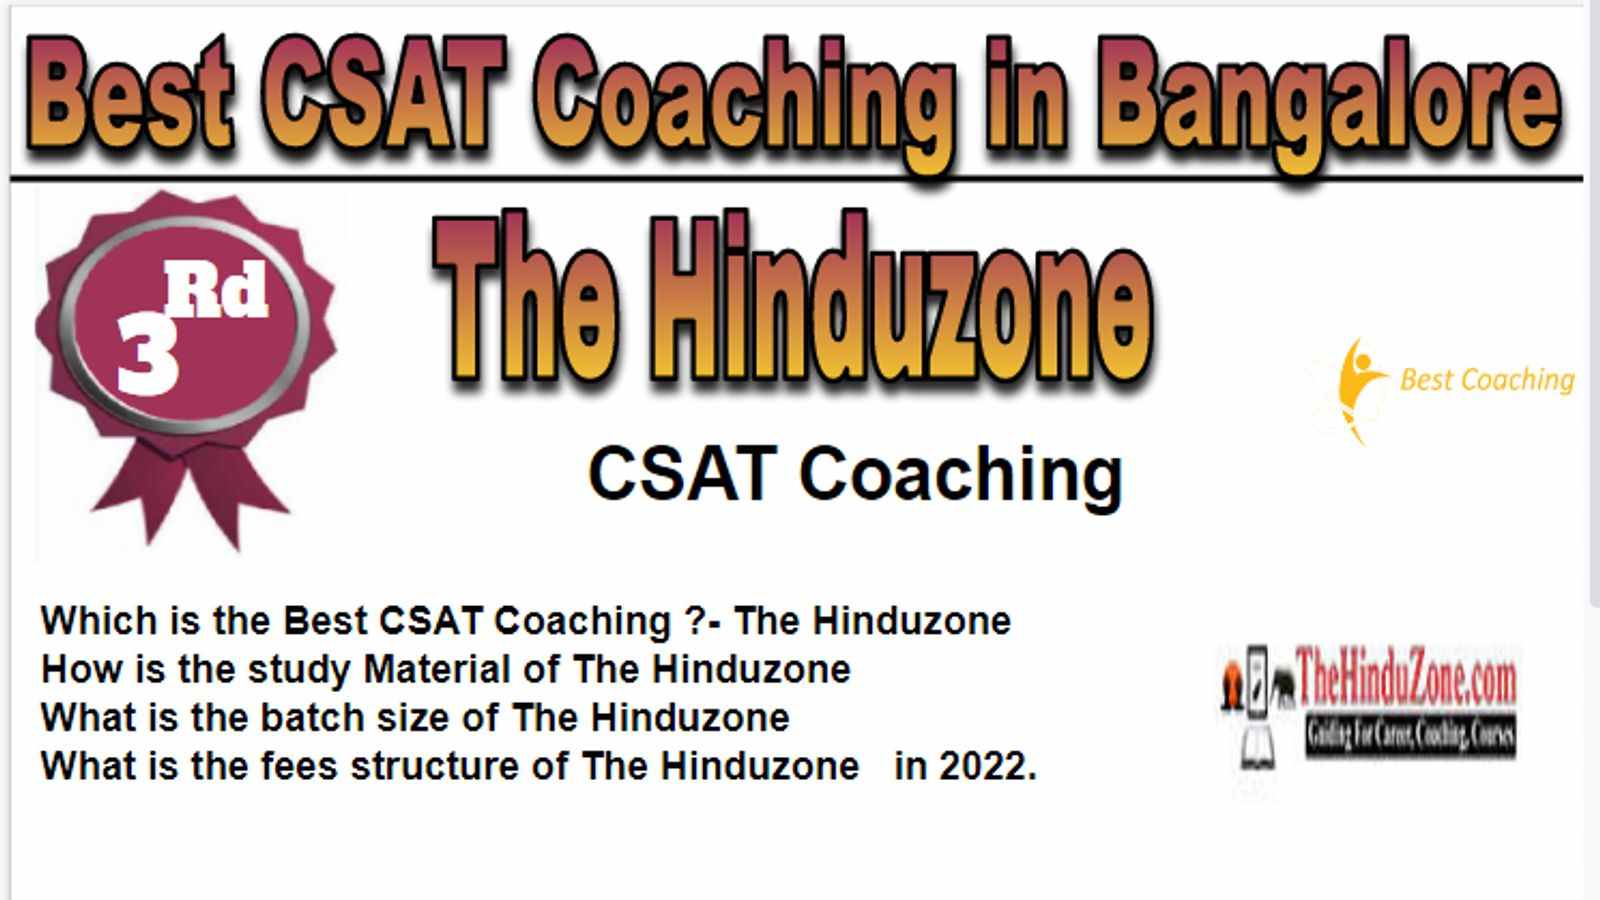 Rank 3 Best CSAT Coaching in Bangalore